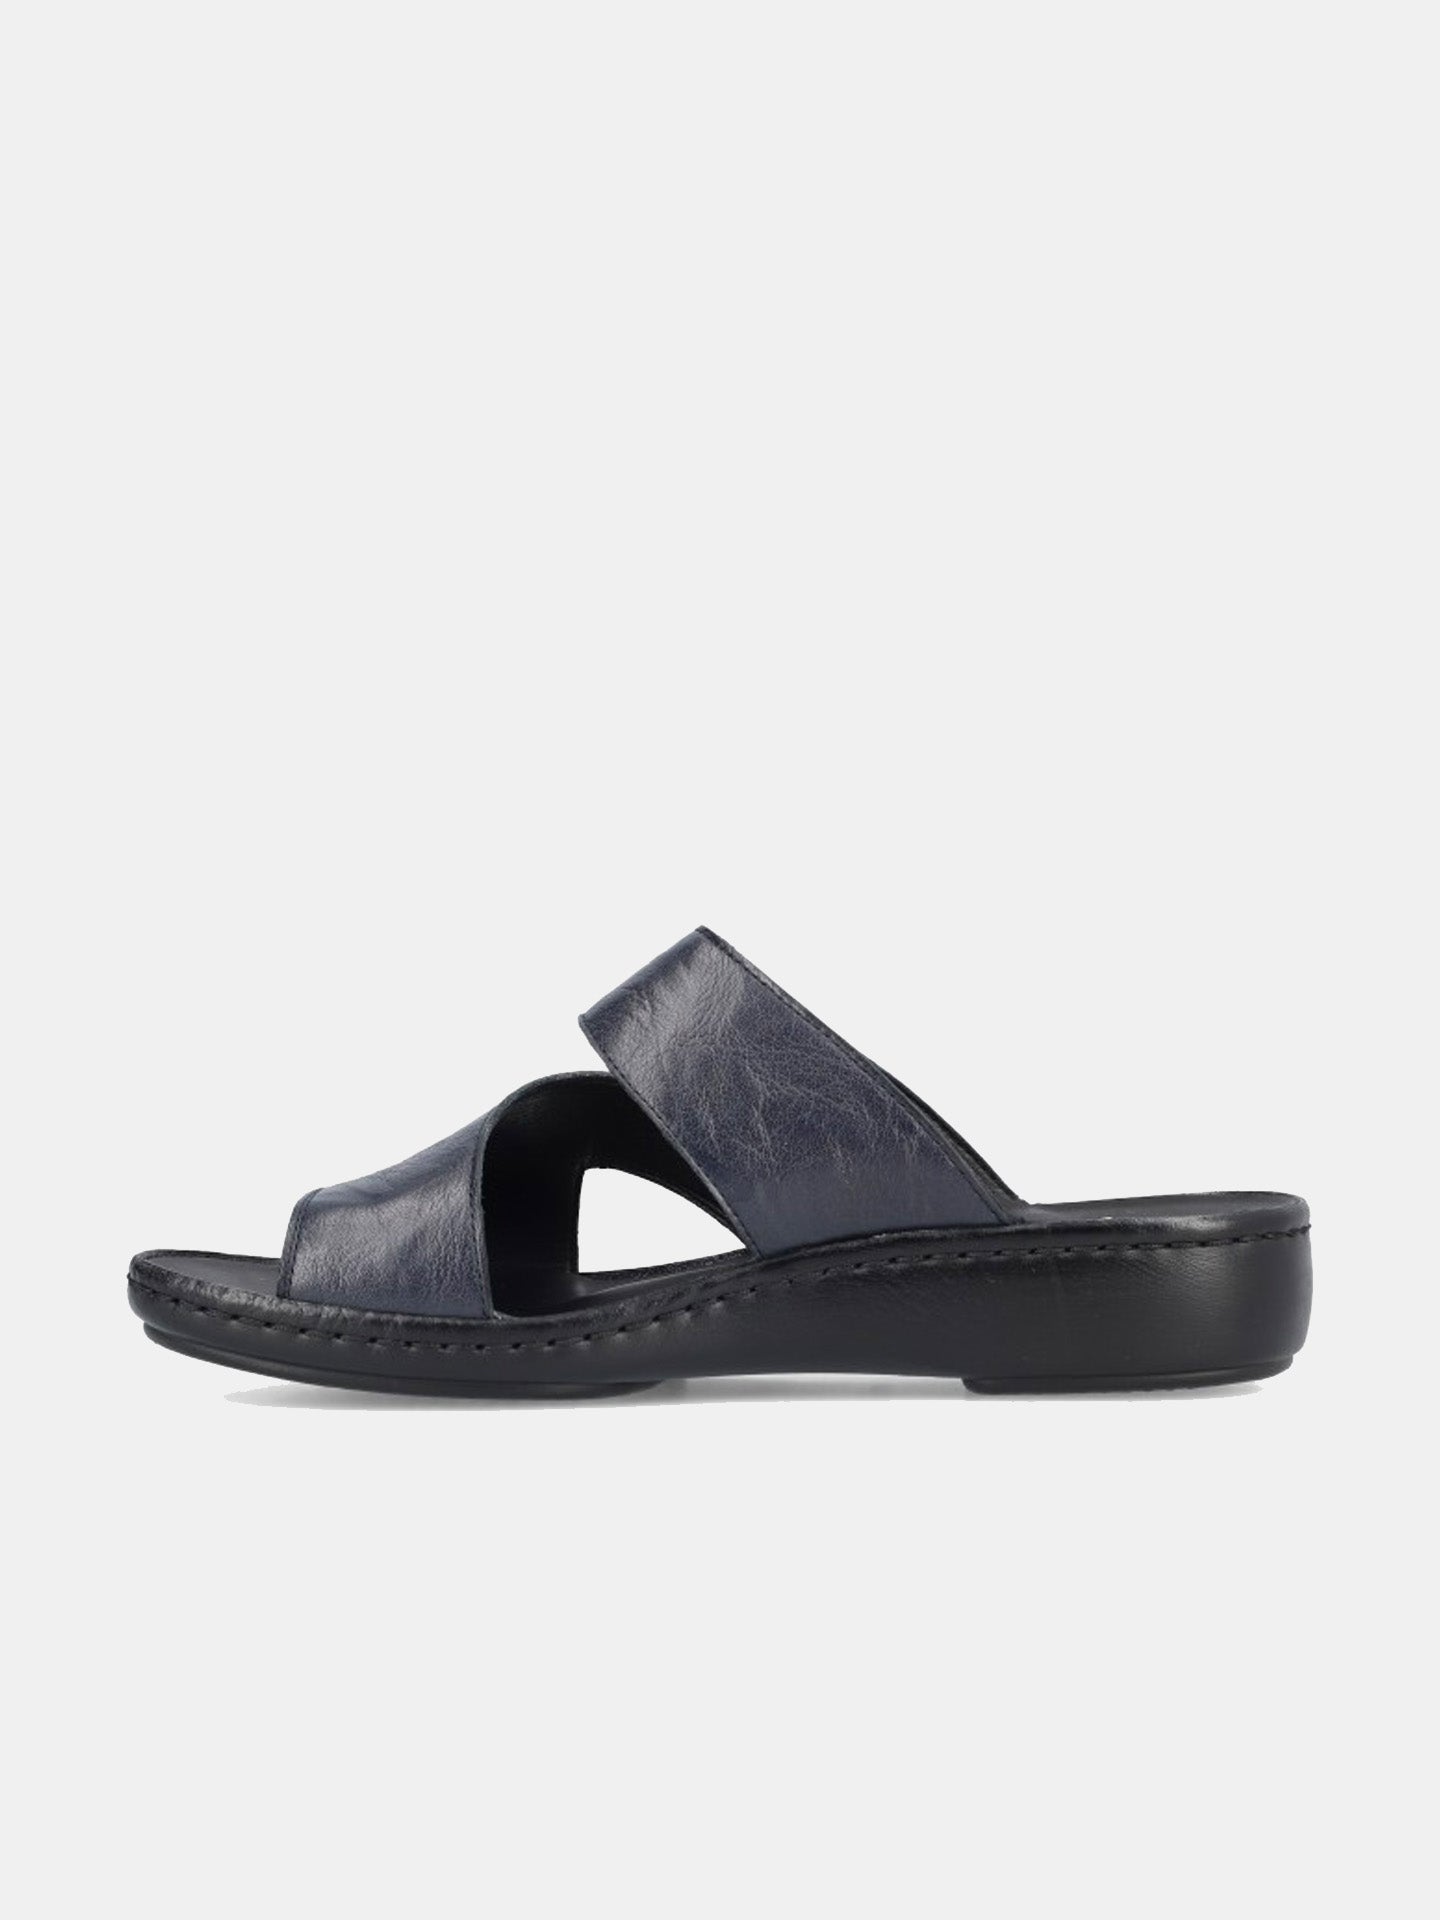 Rieker 23974 Men's Slider Sandals